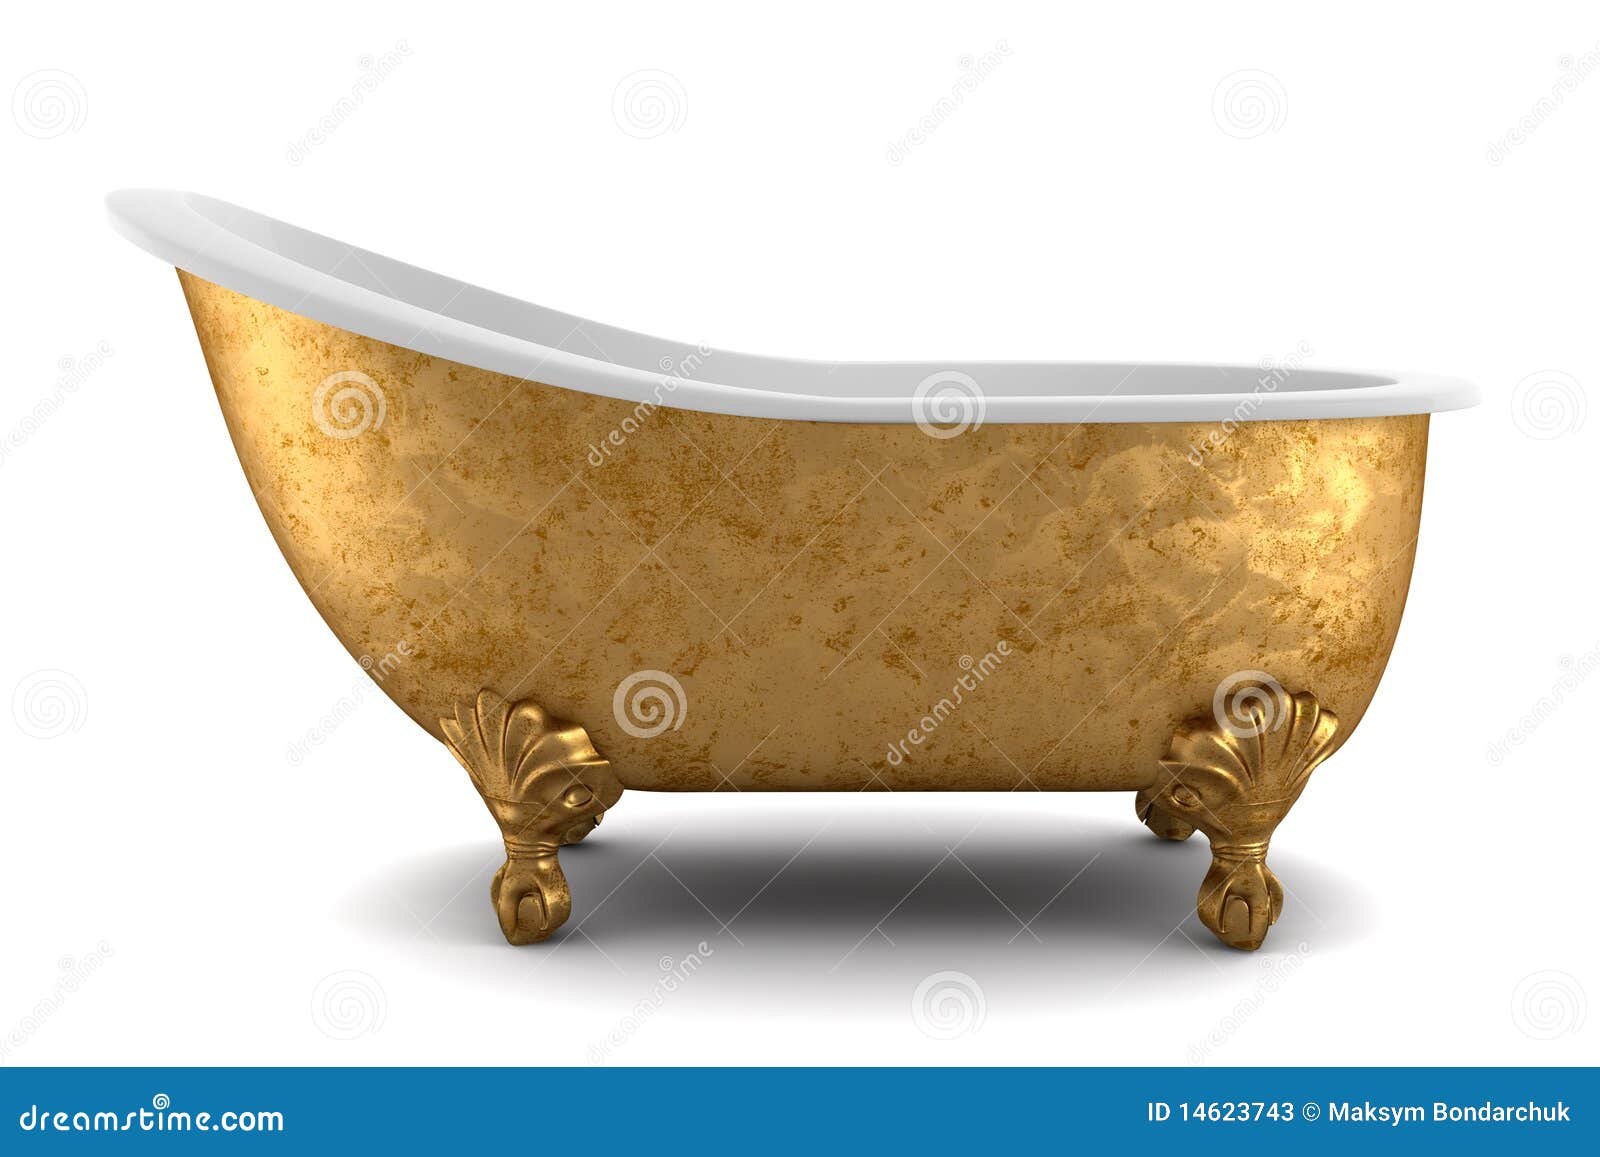 classic bathtub  on white background